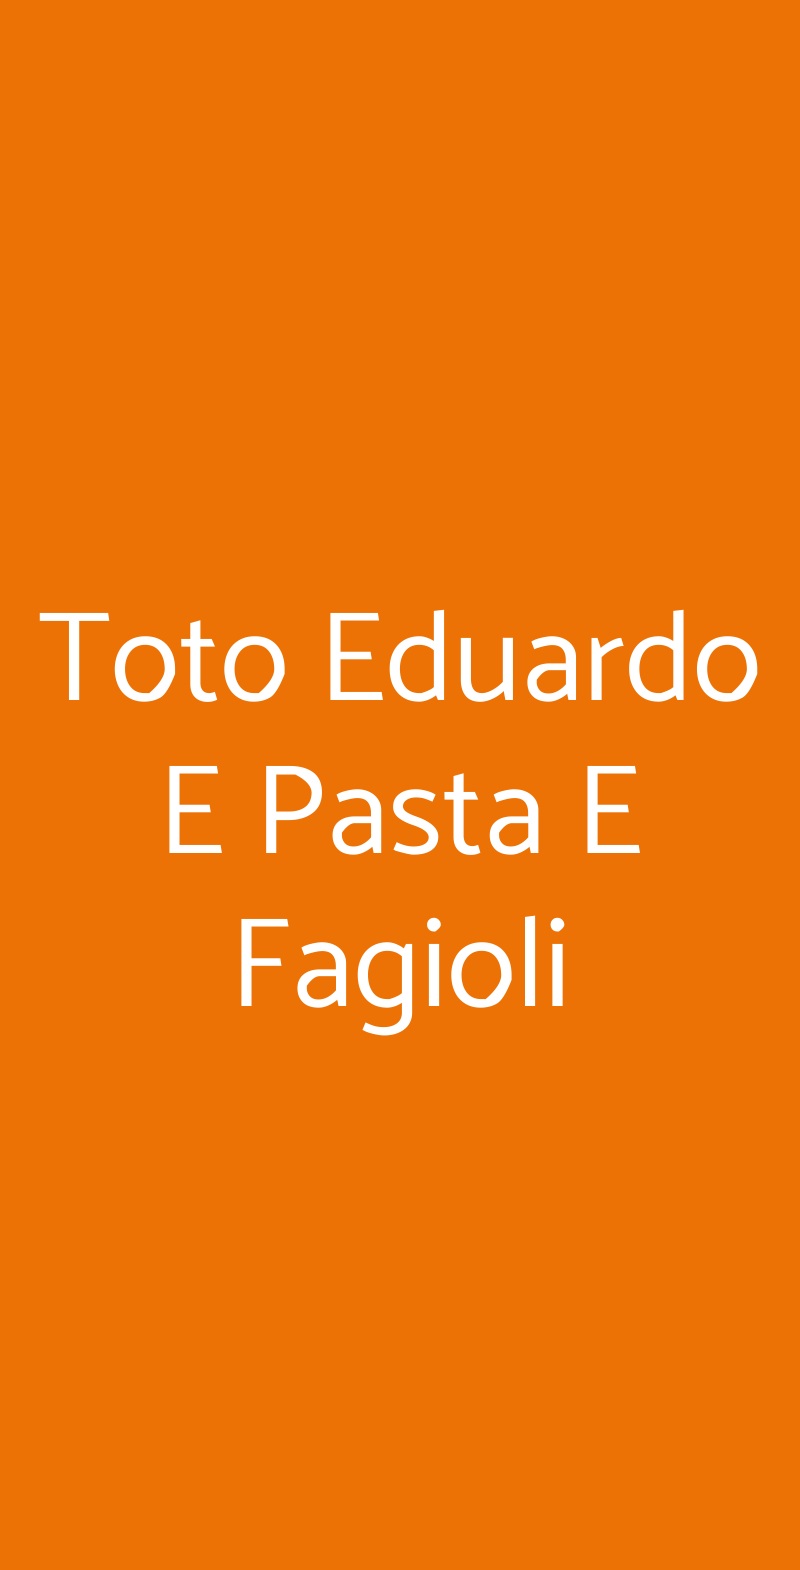 Toto Eduardo E Pasta E Fagioli Napoli menù 1 pagina